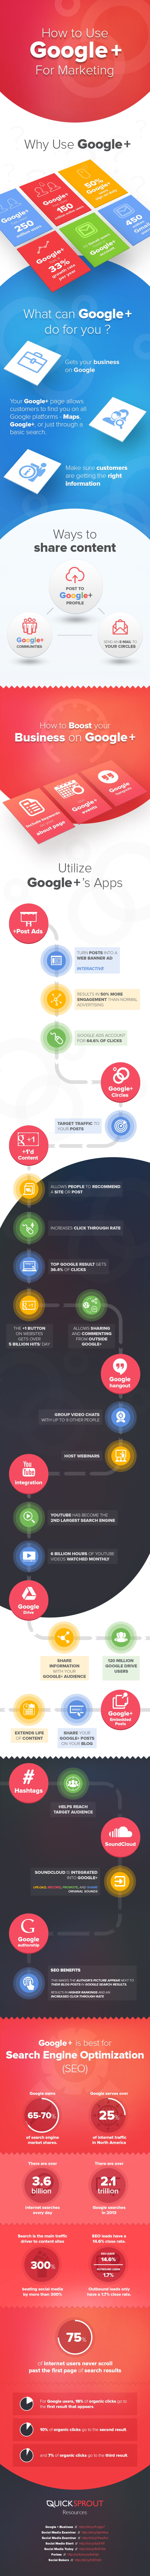 Cómo usar Google + para marketing